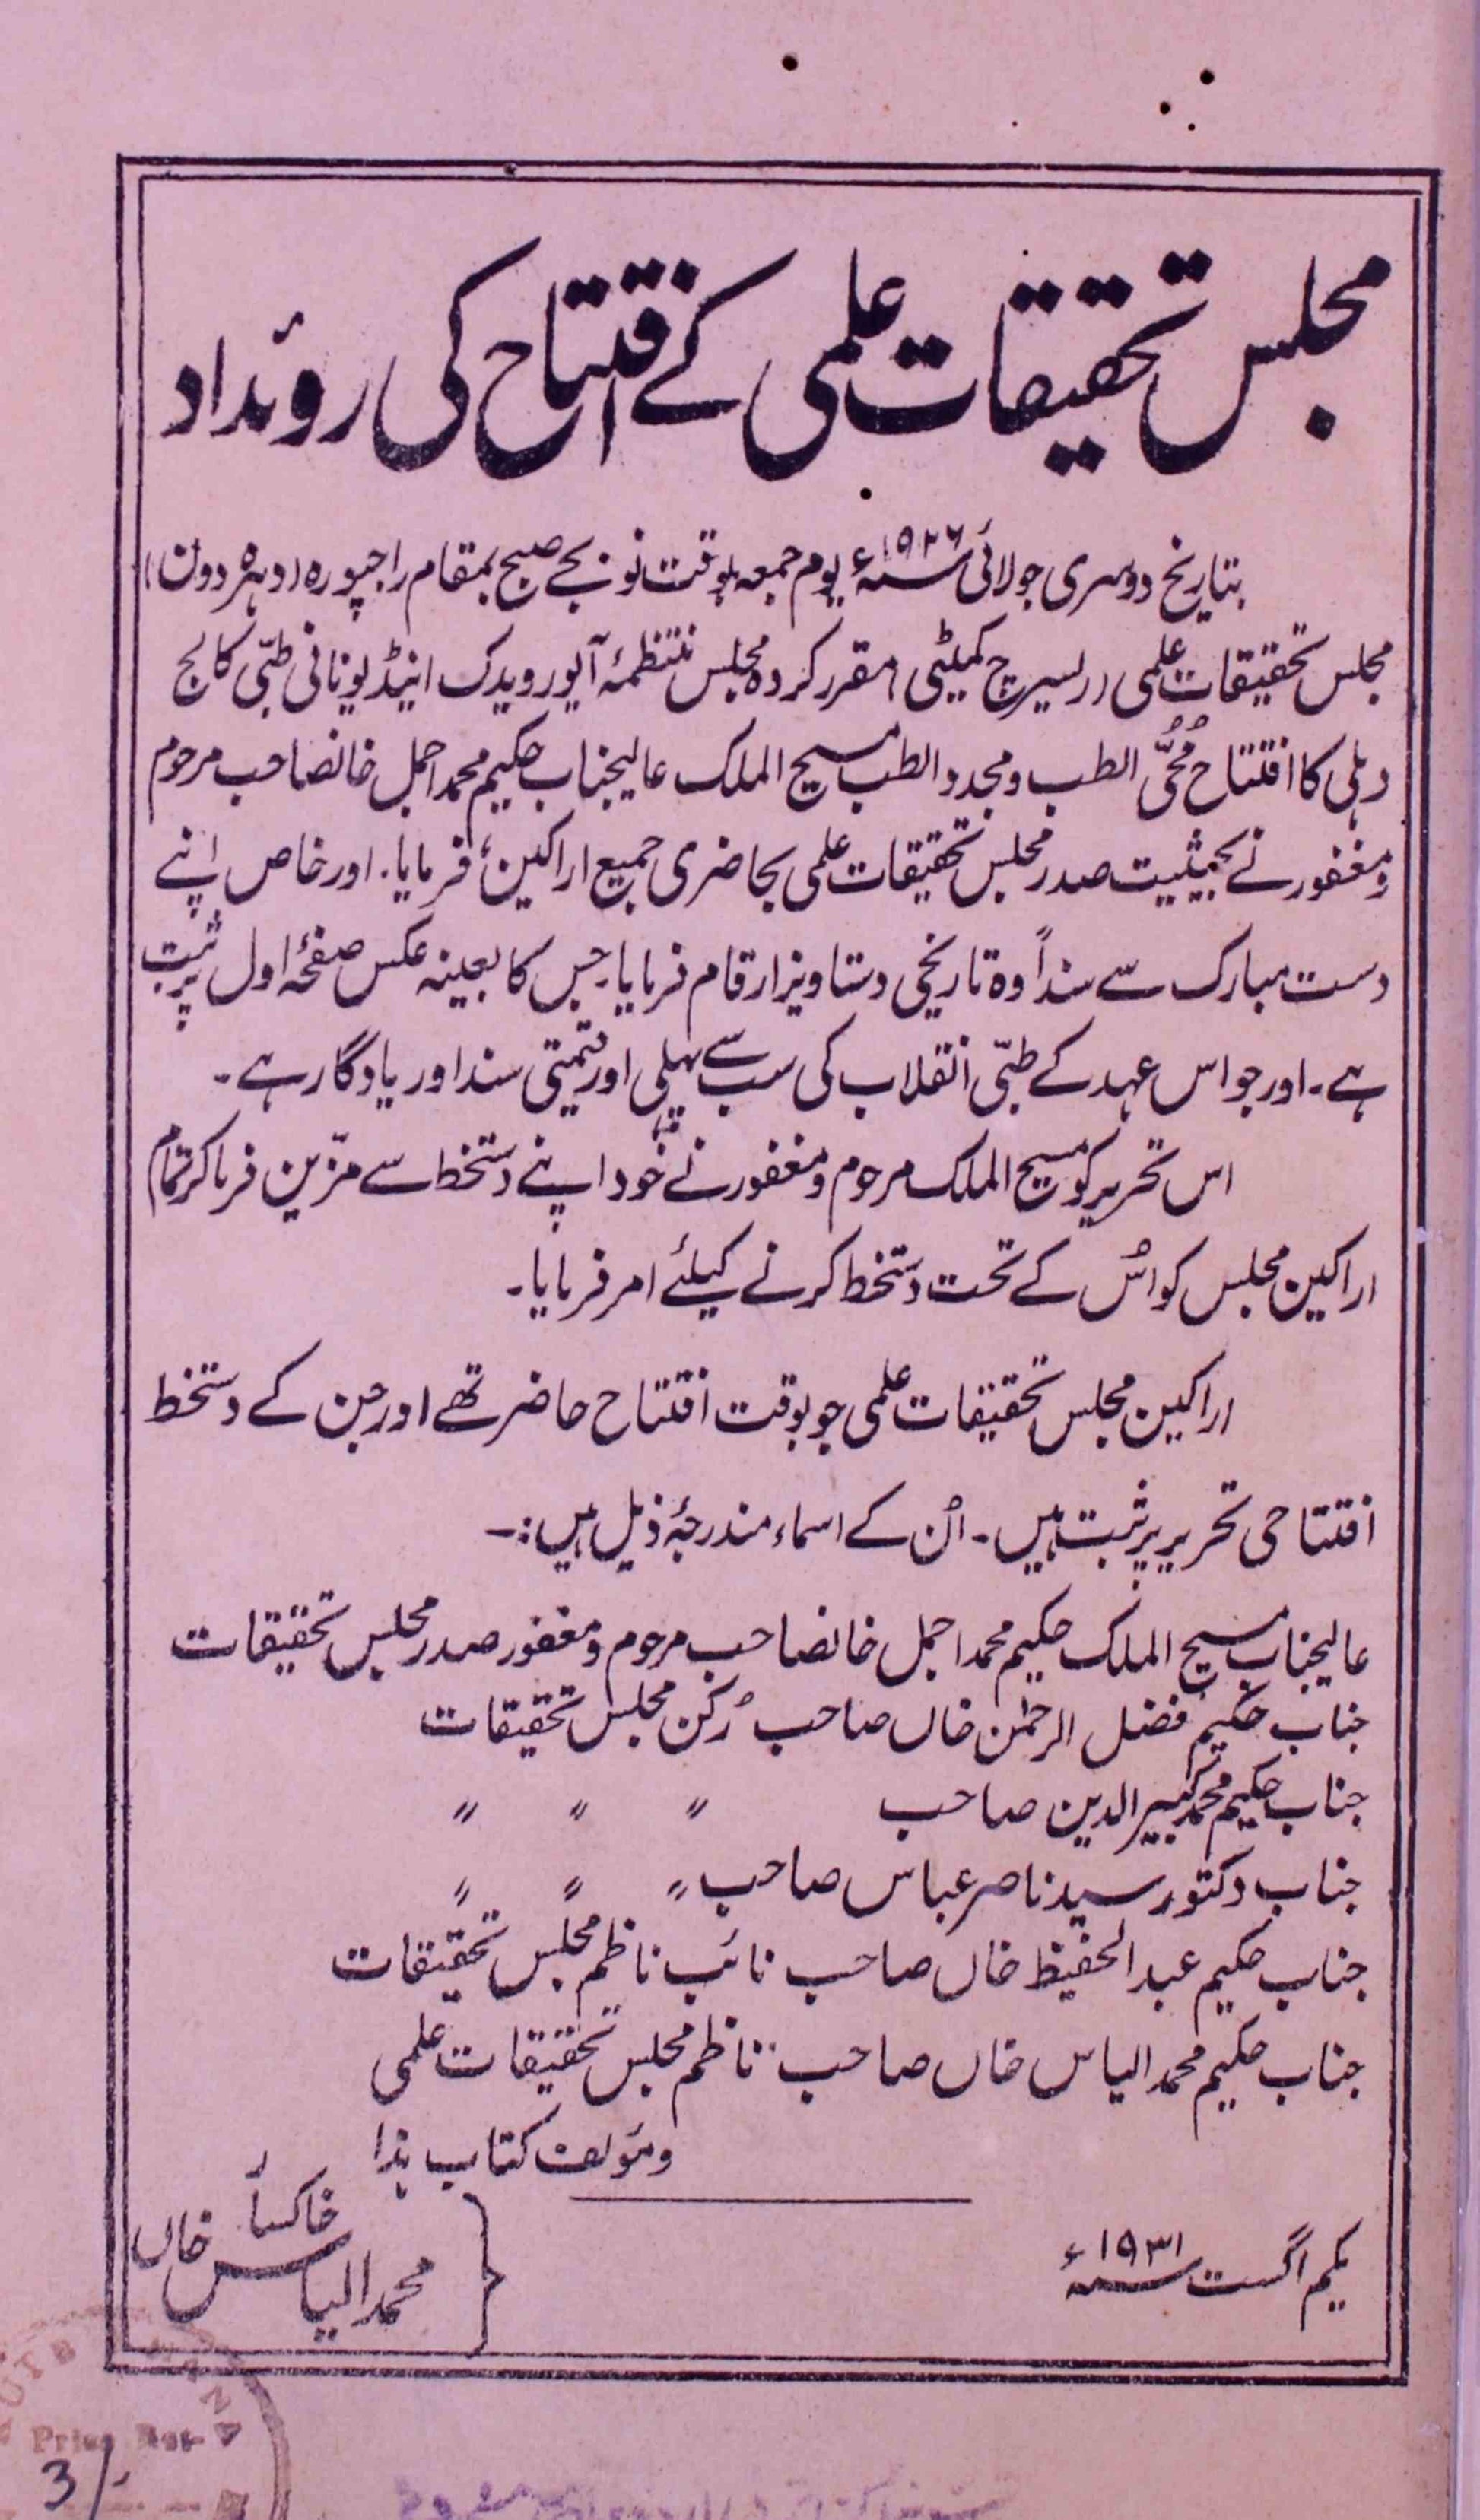 Majlis-e-Tahqiqat-e-Ilmi Ke Iftitah Ki Rudad